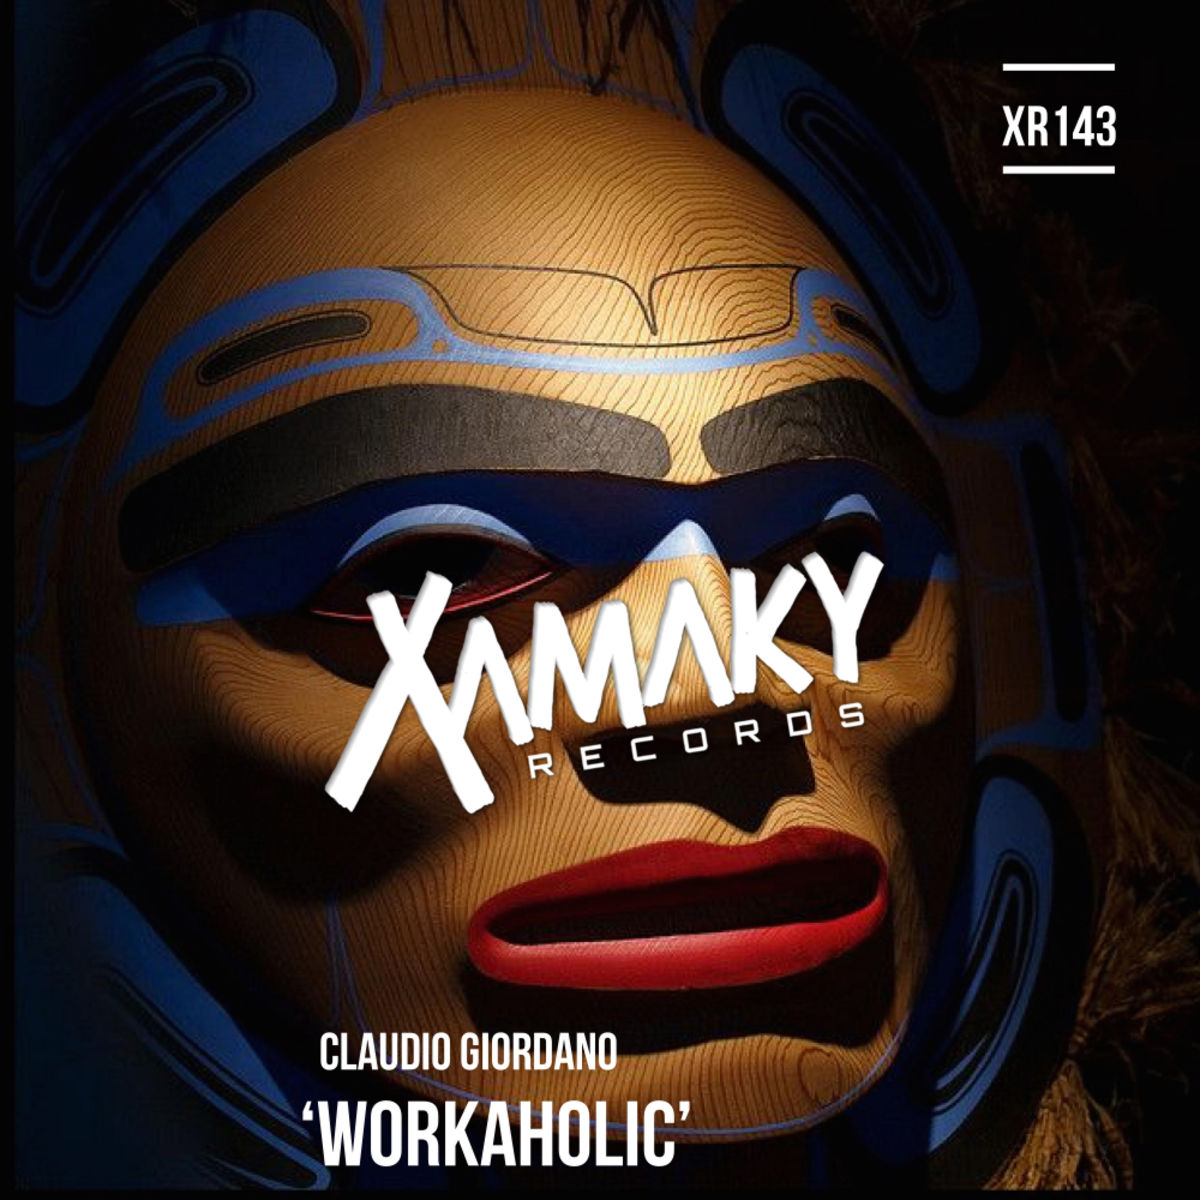 Claudio Giordano - Workaholic / Xamaky Records